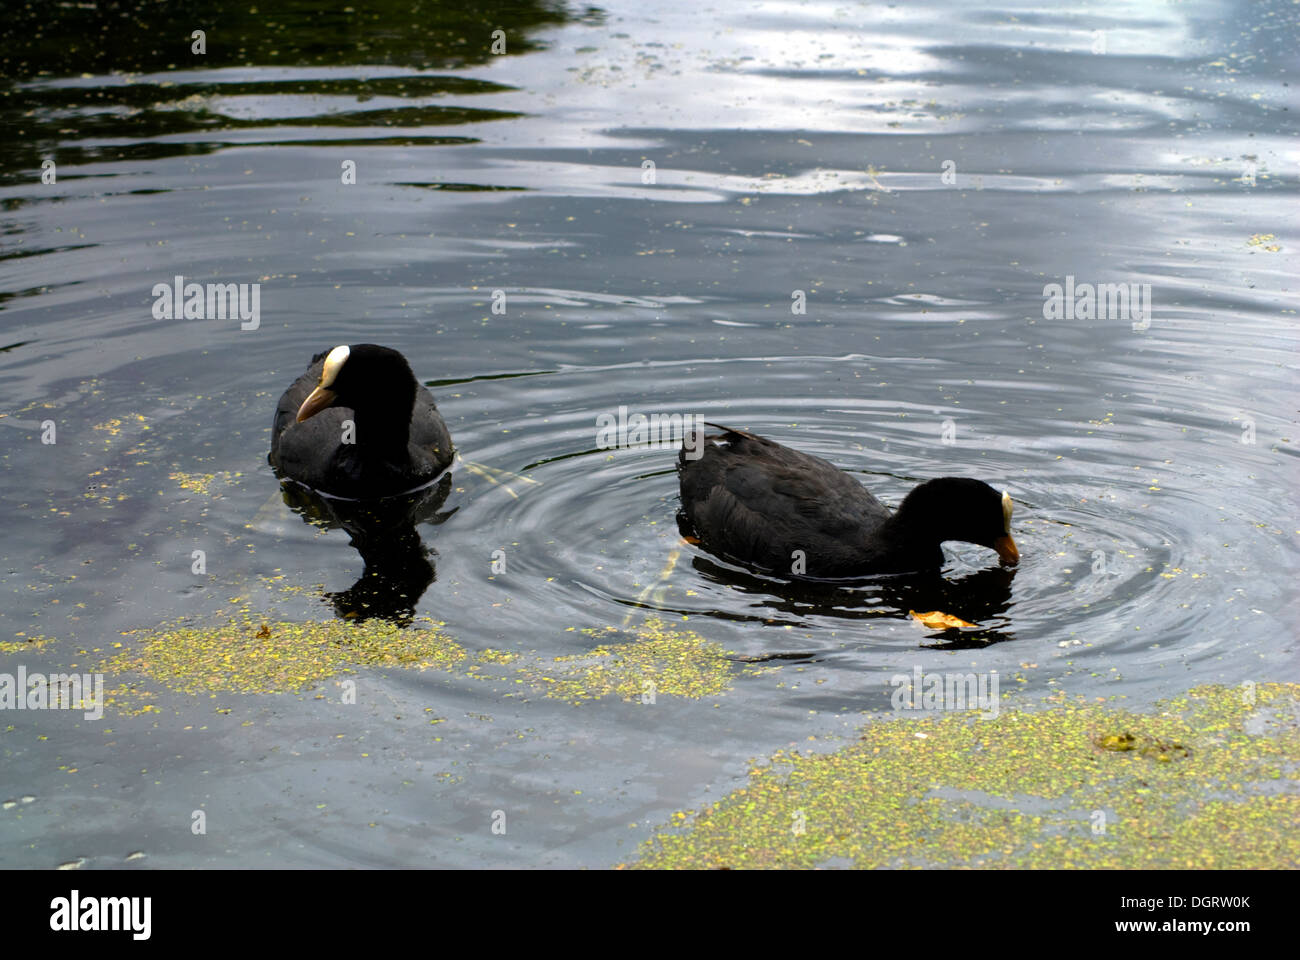 Wild ducks swimming in the water Stock Photo